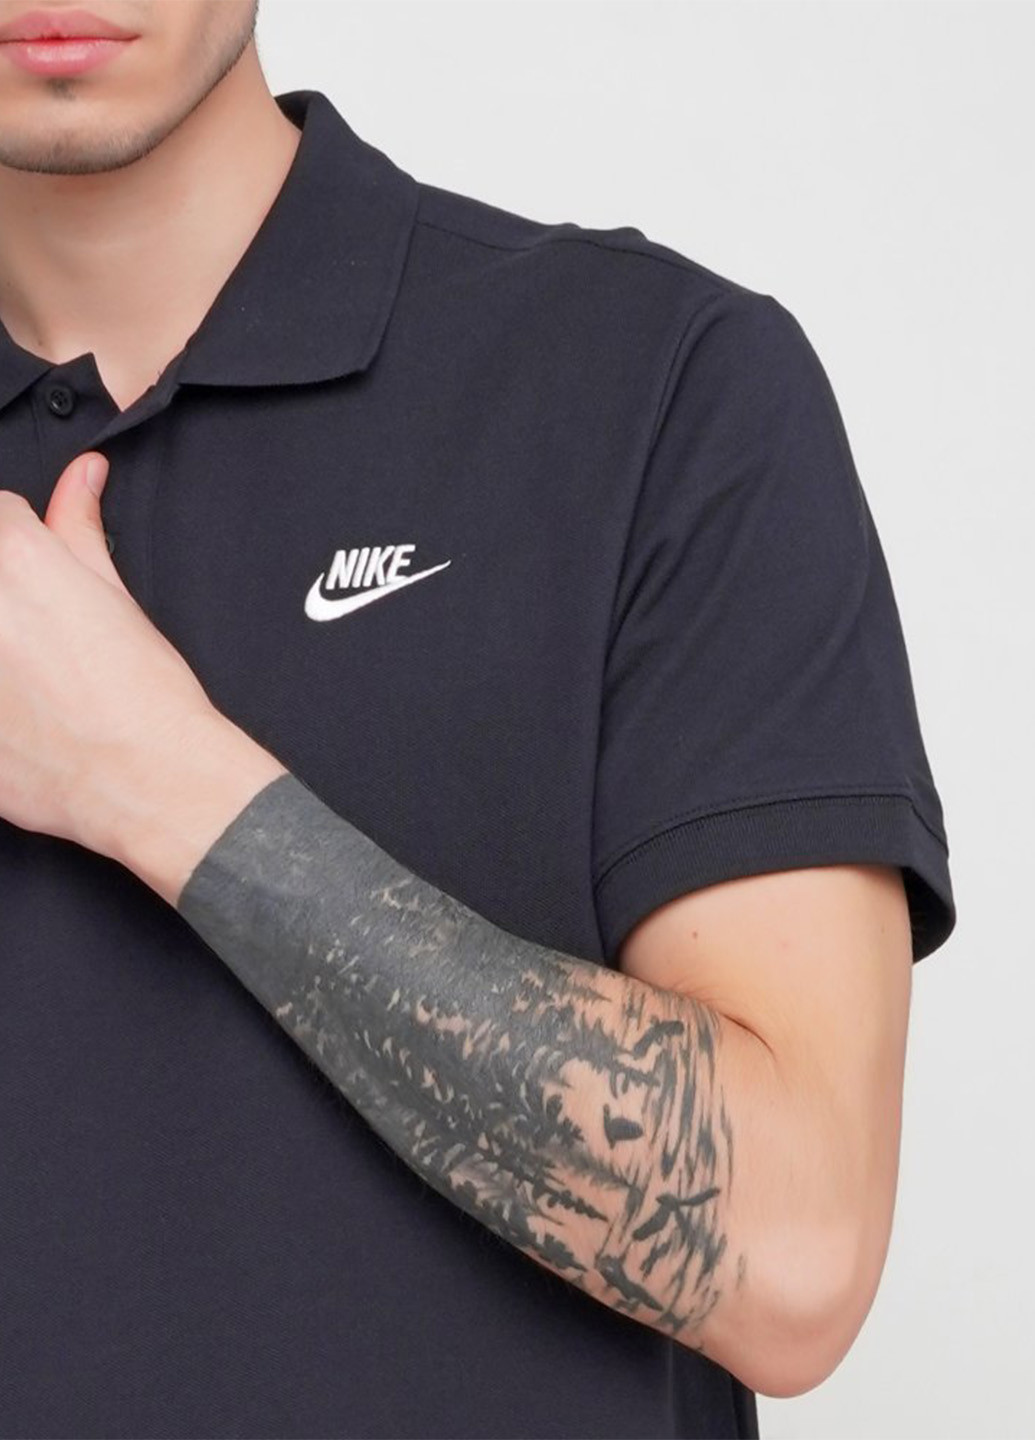 Черная футболка-поло для мужчин Nike с логотипом